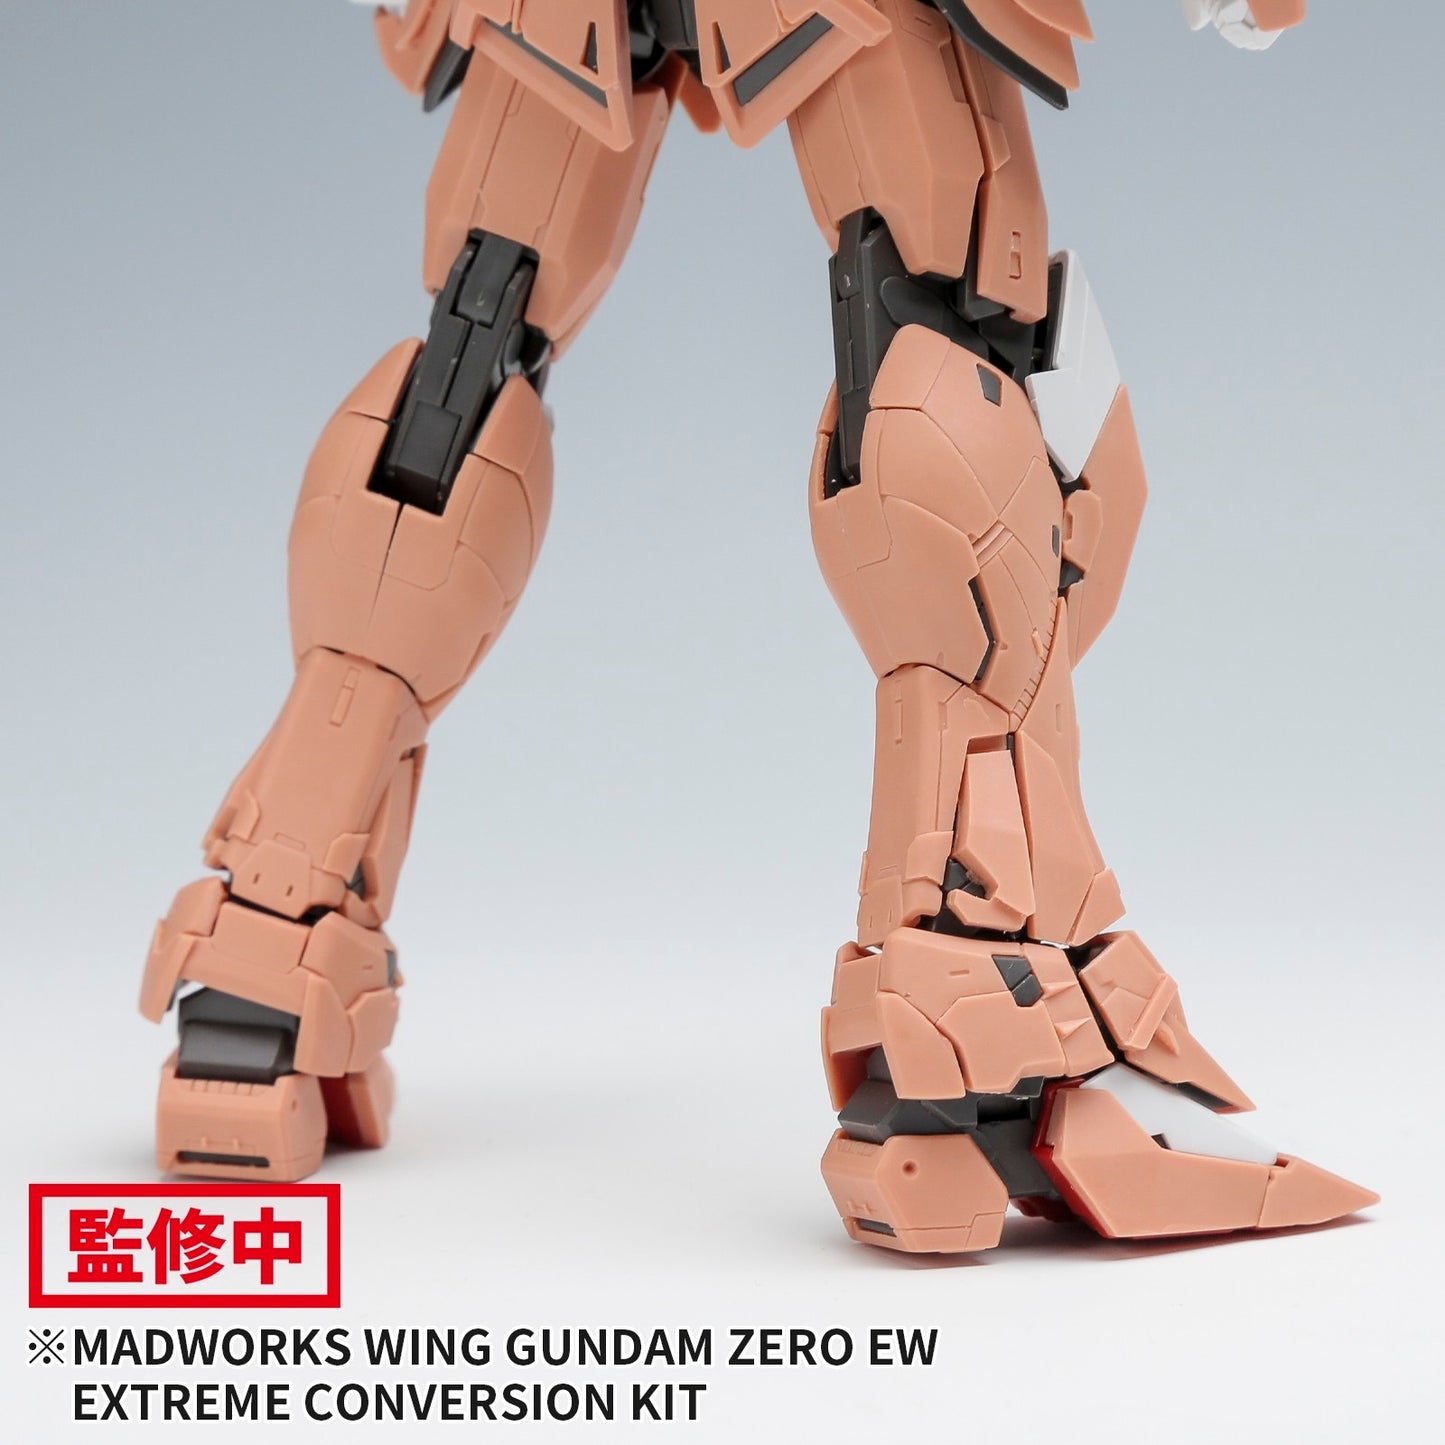 Madworks MG Wing Gundam EW GK Conversion Kit